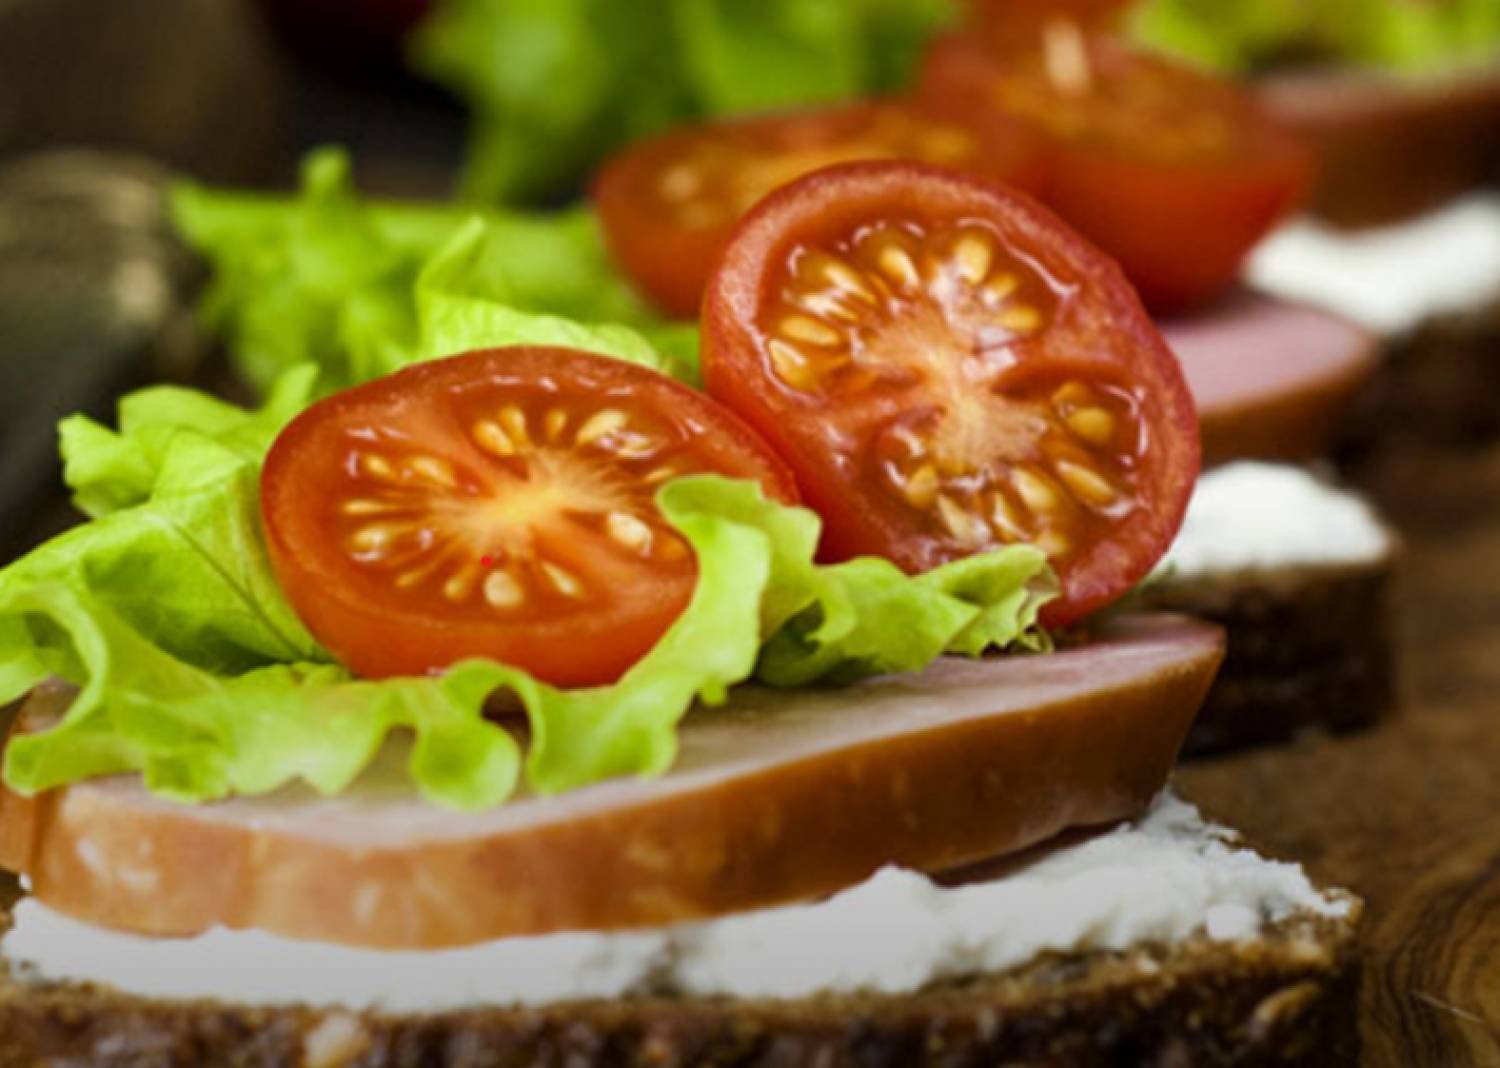 Taste & Diet: Ανακαλύψτε νέες γεύσεις και προτάσεις για μια υγιεινή διατροφή